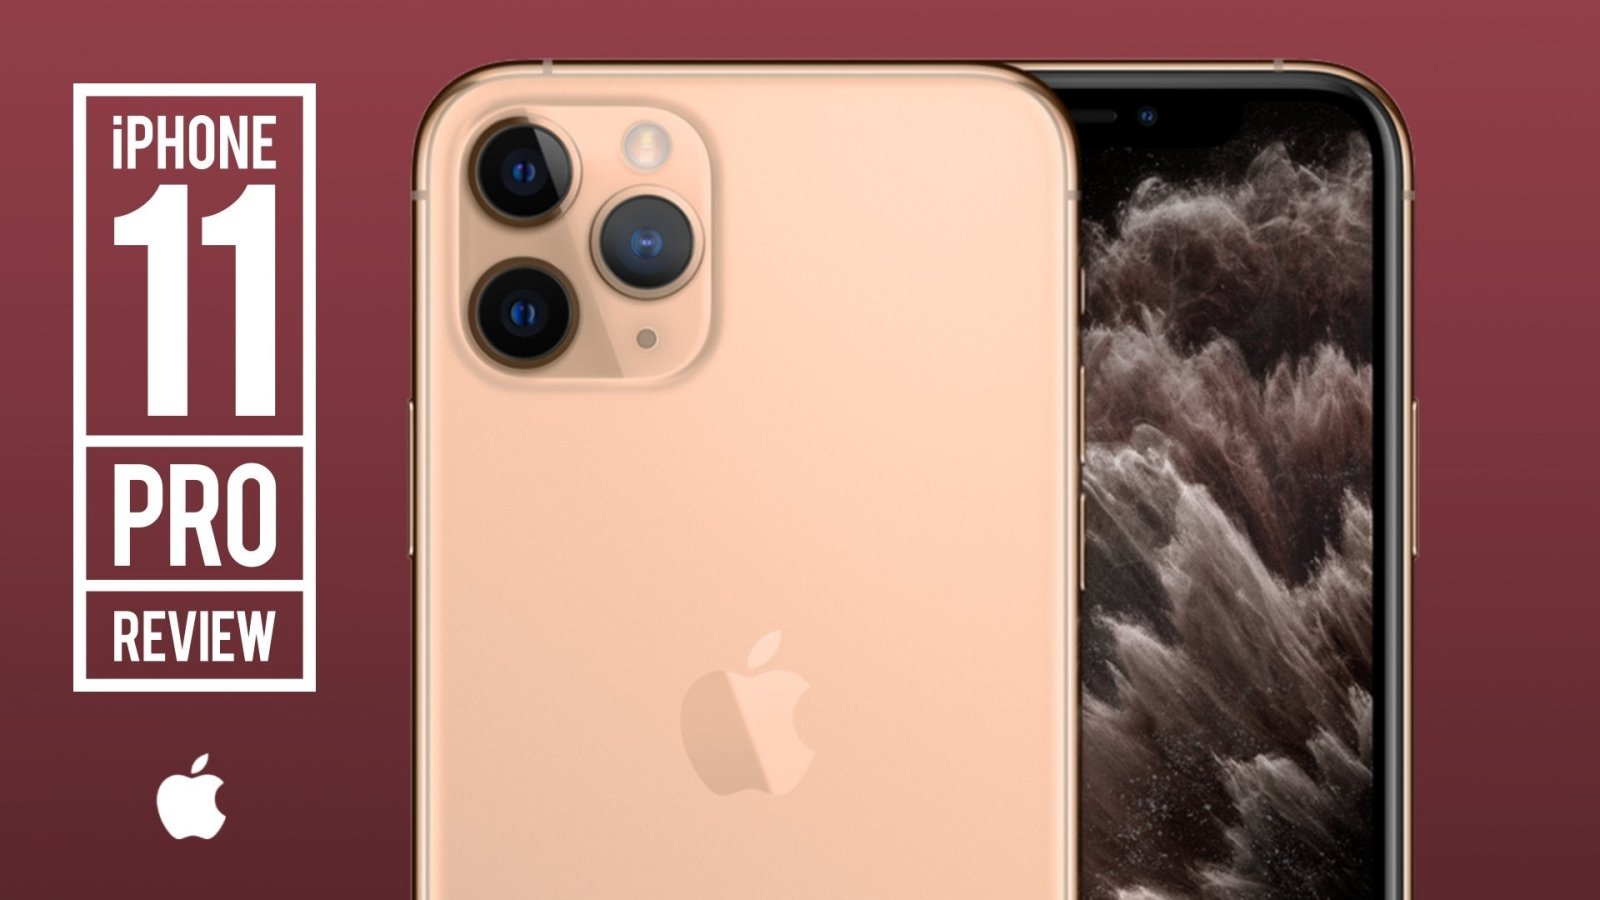 iPhone 11 Pro Review - Video Camera Comparison - Editors Keys